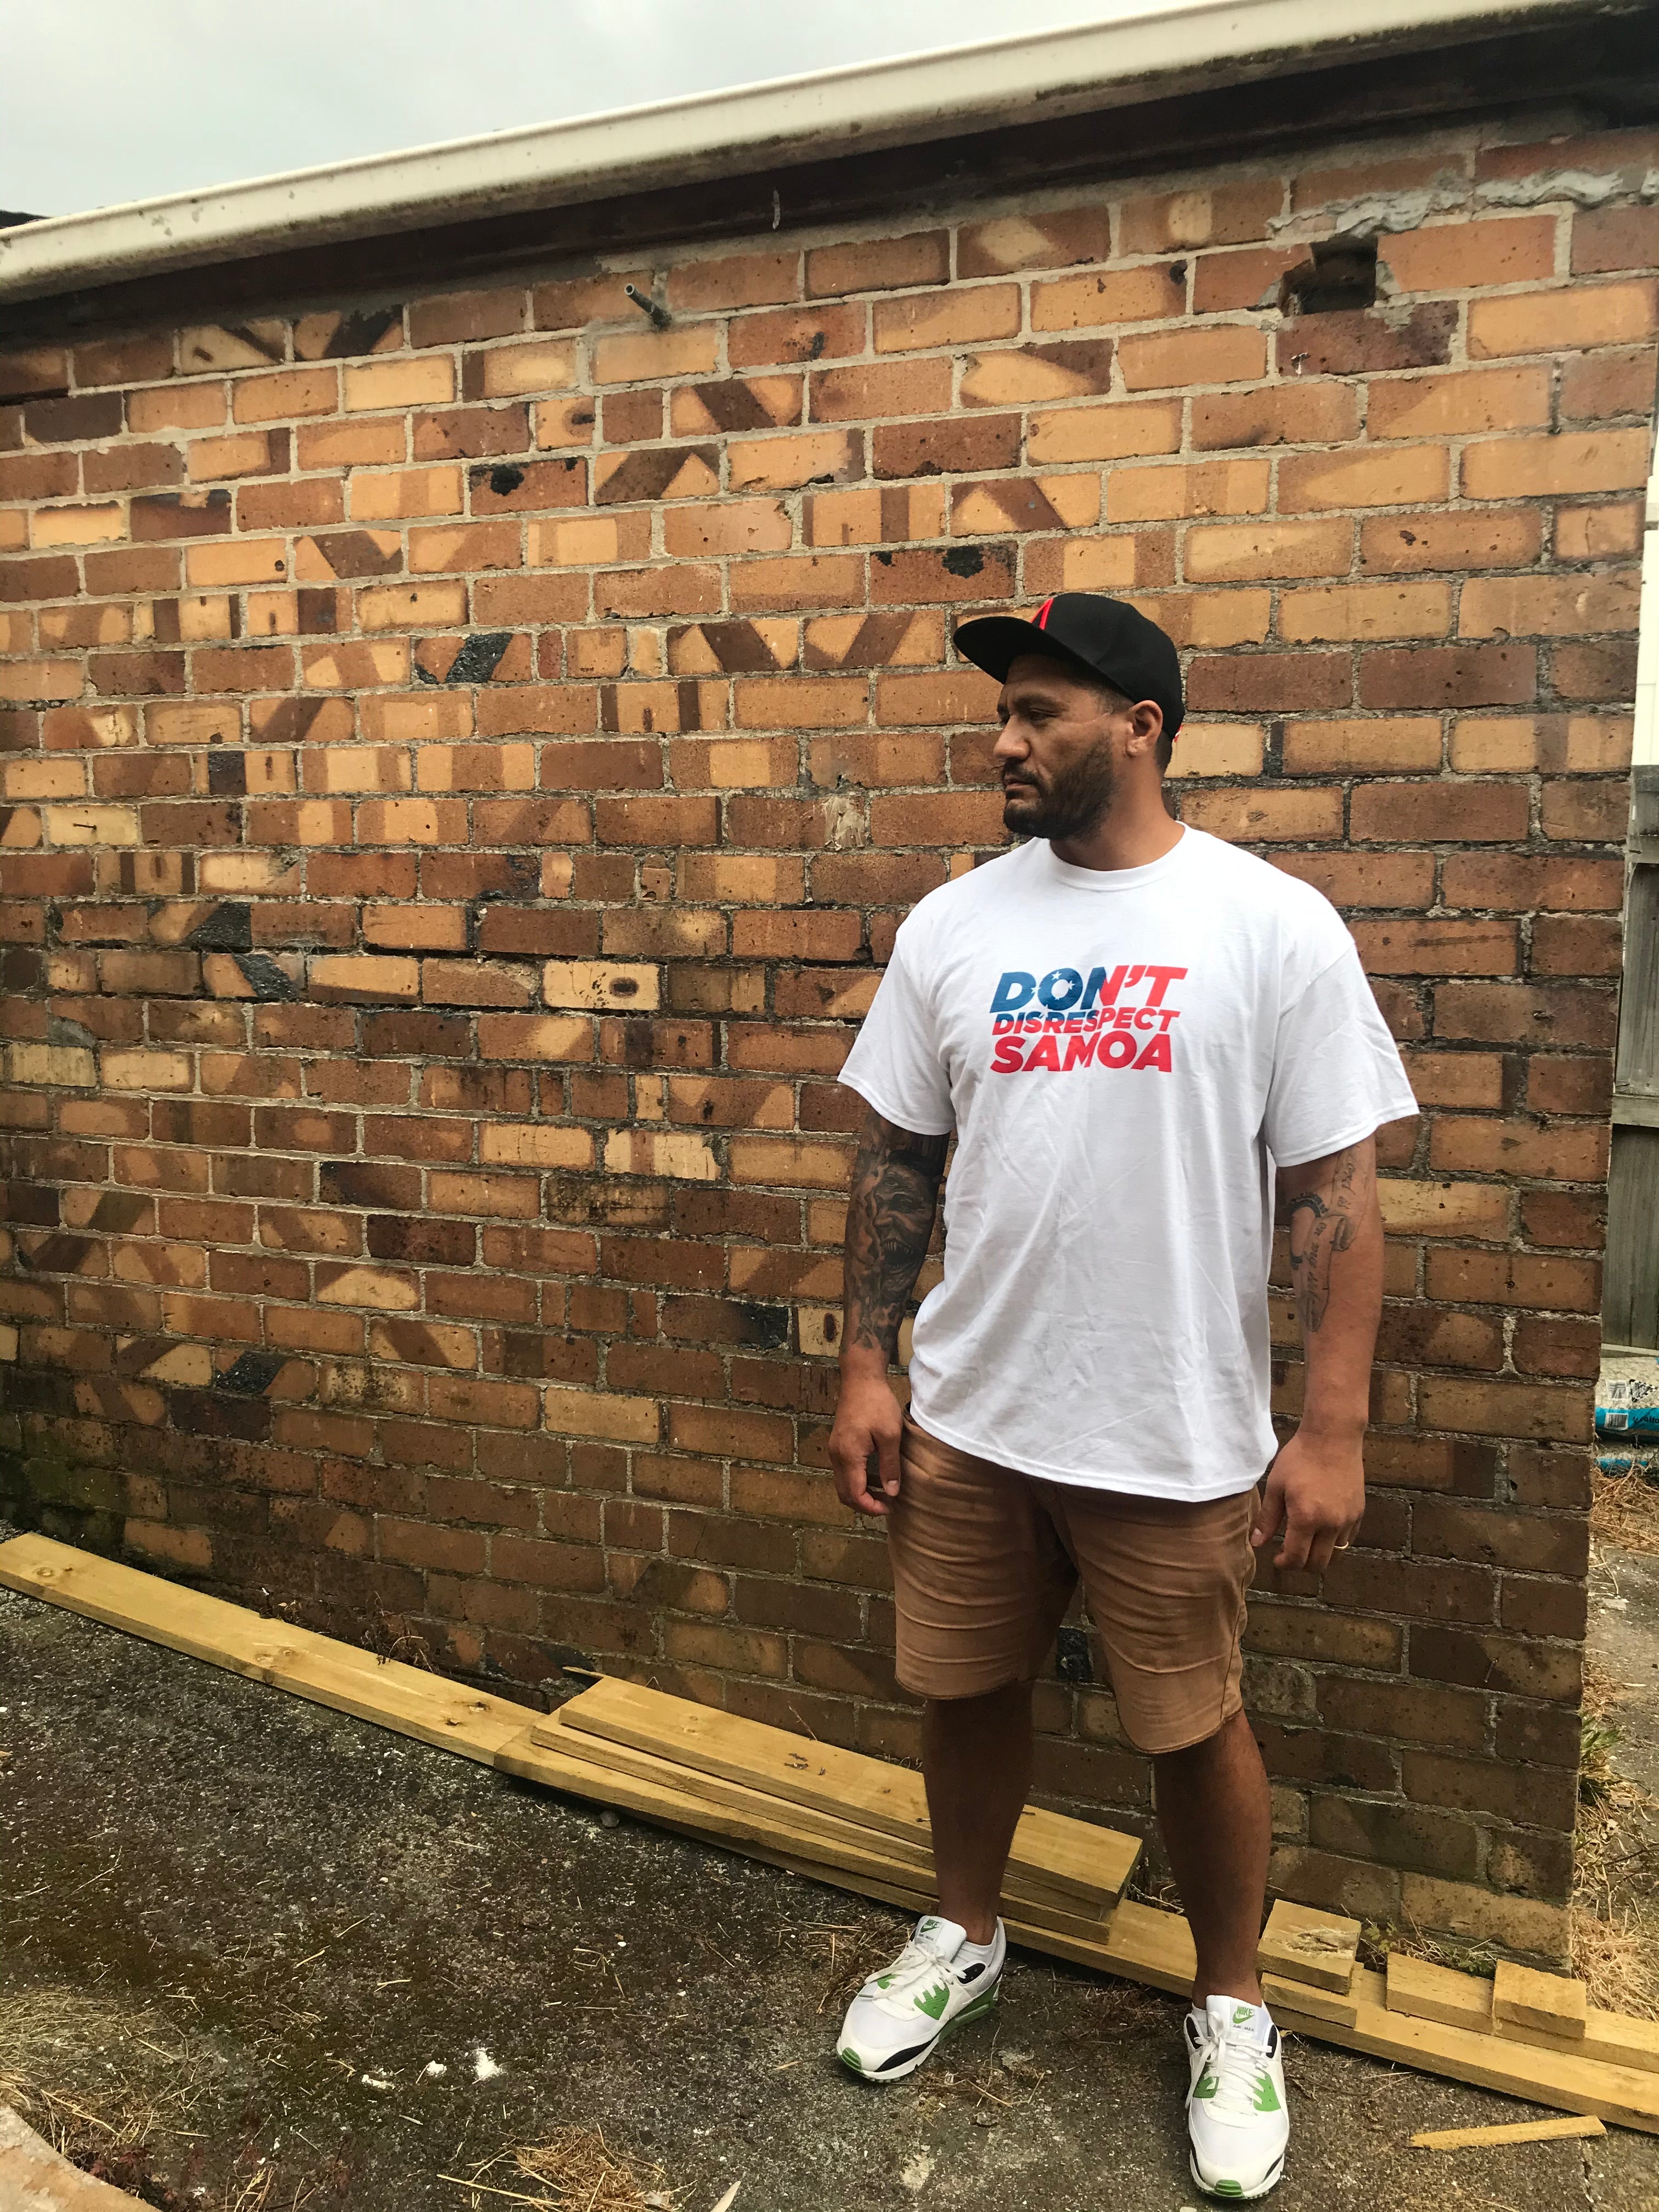 Don't Disrepect Samoa Fundraiser T-Shirts